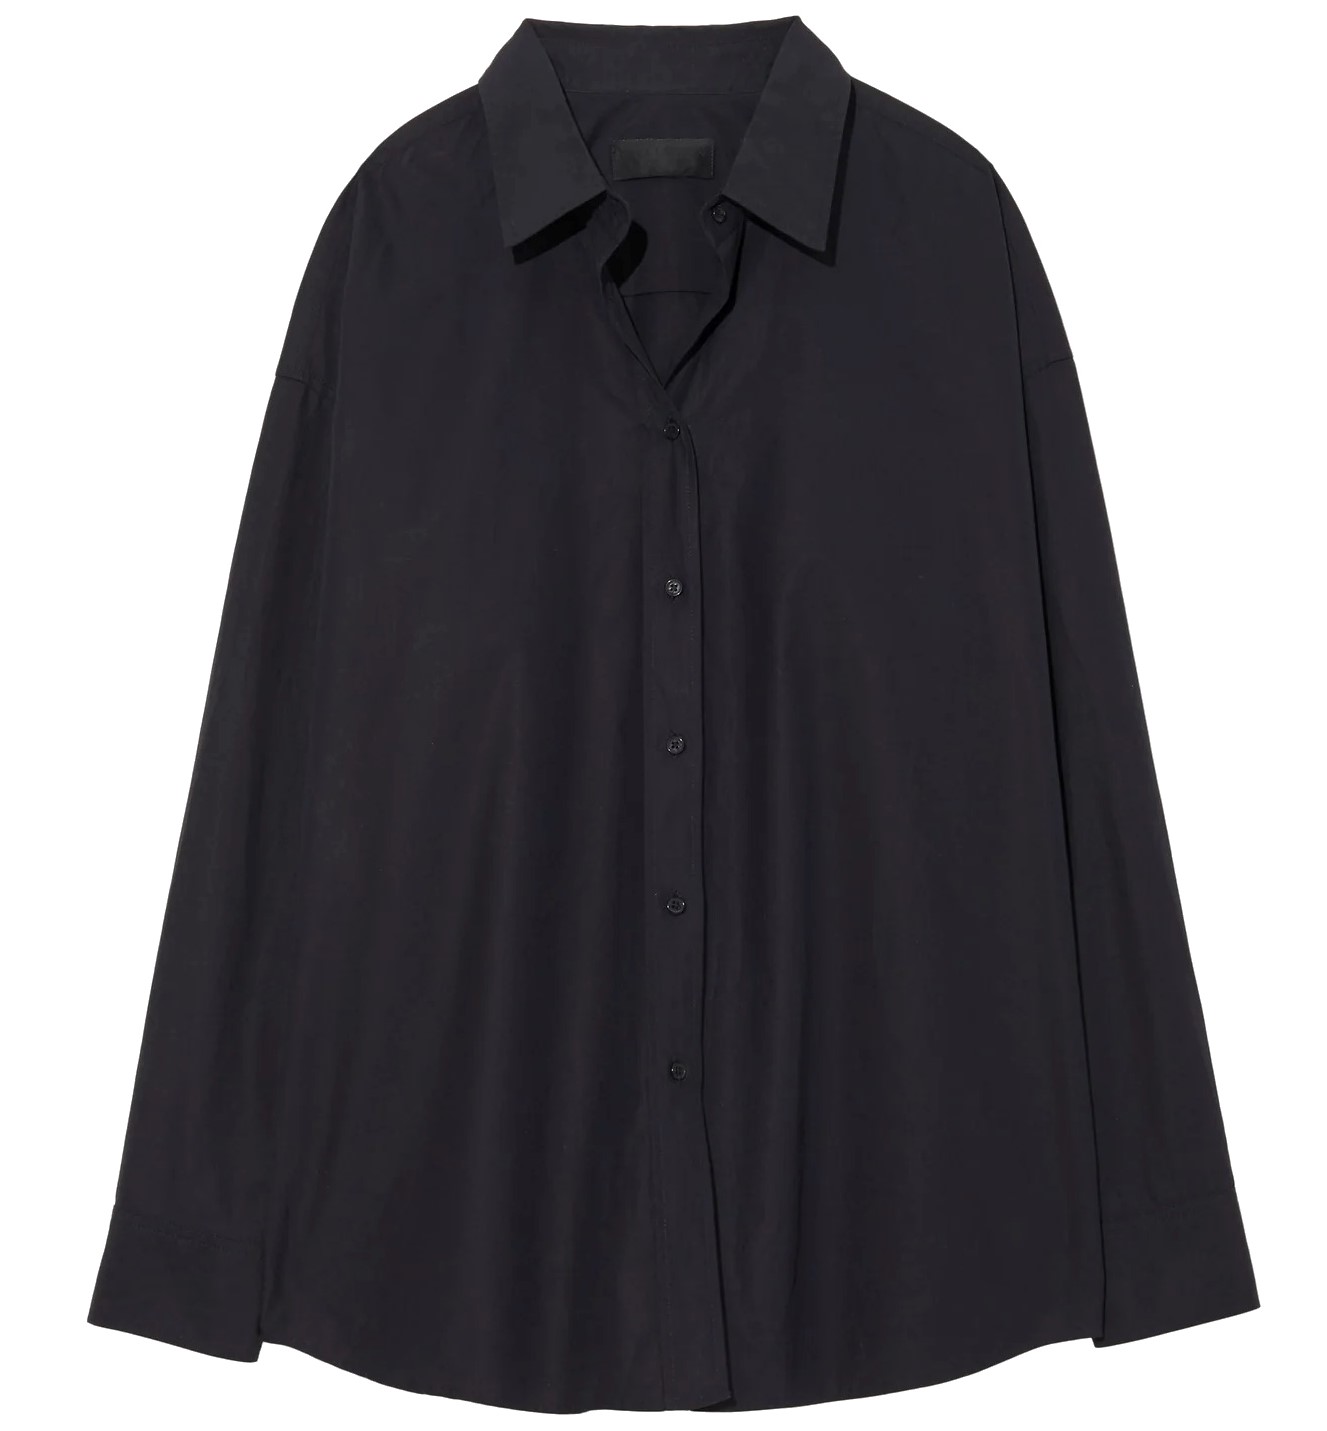 NILI LOTAN Mael Oversized Shirt in Black XS